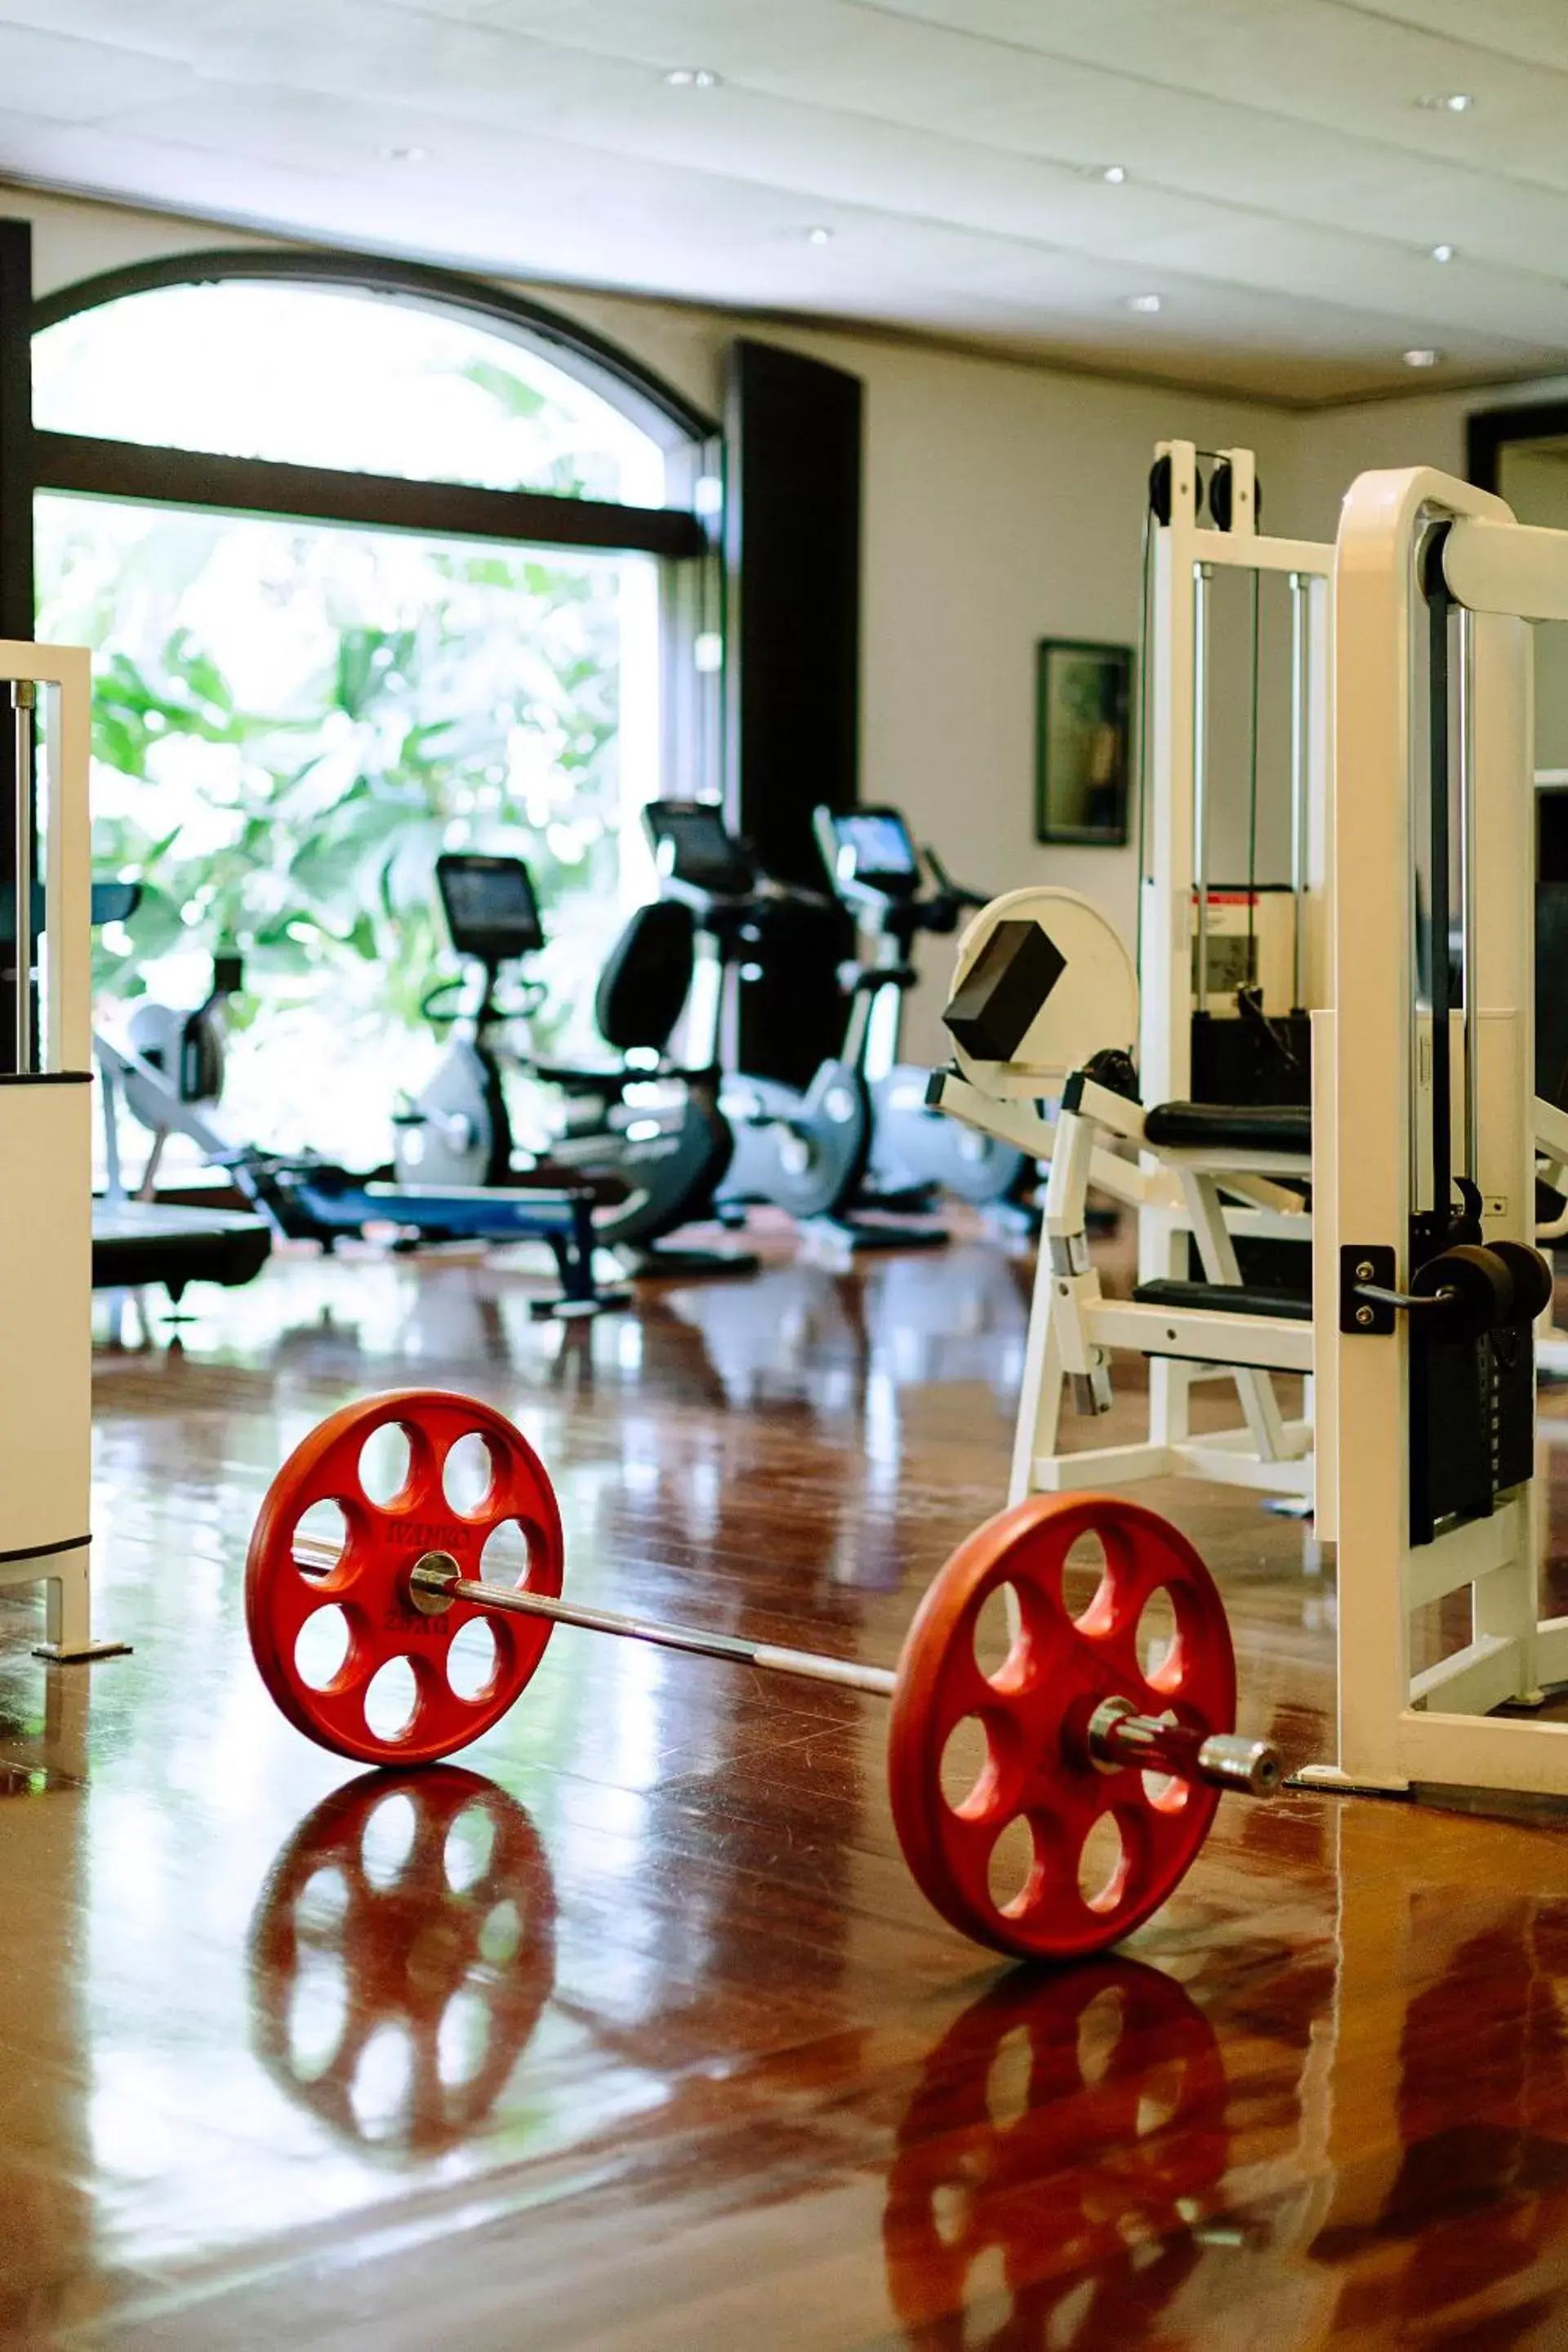 Fitness centre/facilities, Fitness Center/Facilities in Anantara Siam Bangkok Hotel